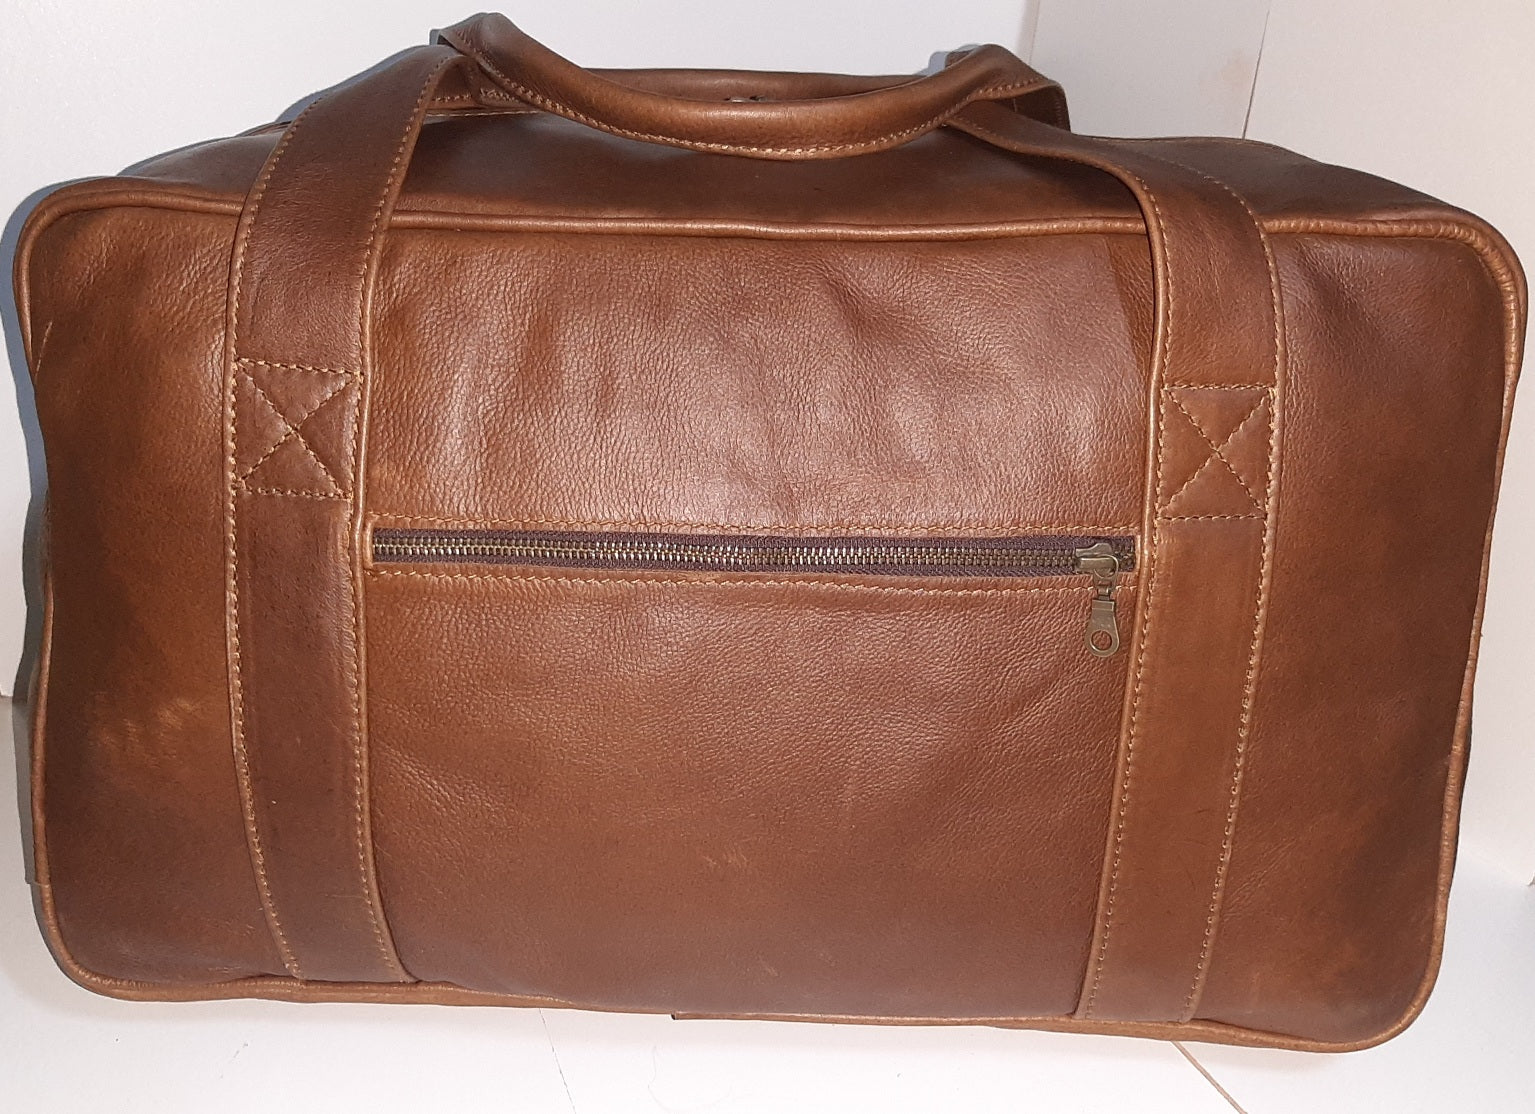 Centurion travel bags big - Cape Masai leather